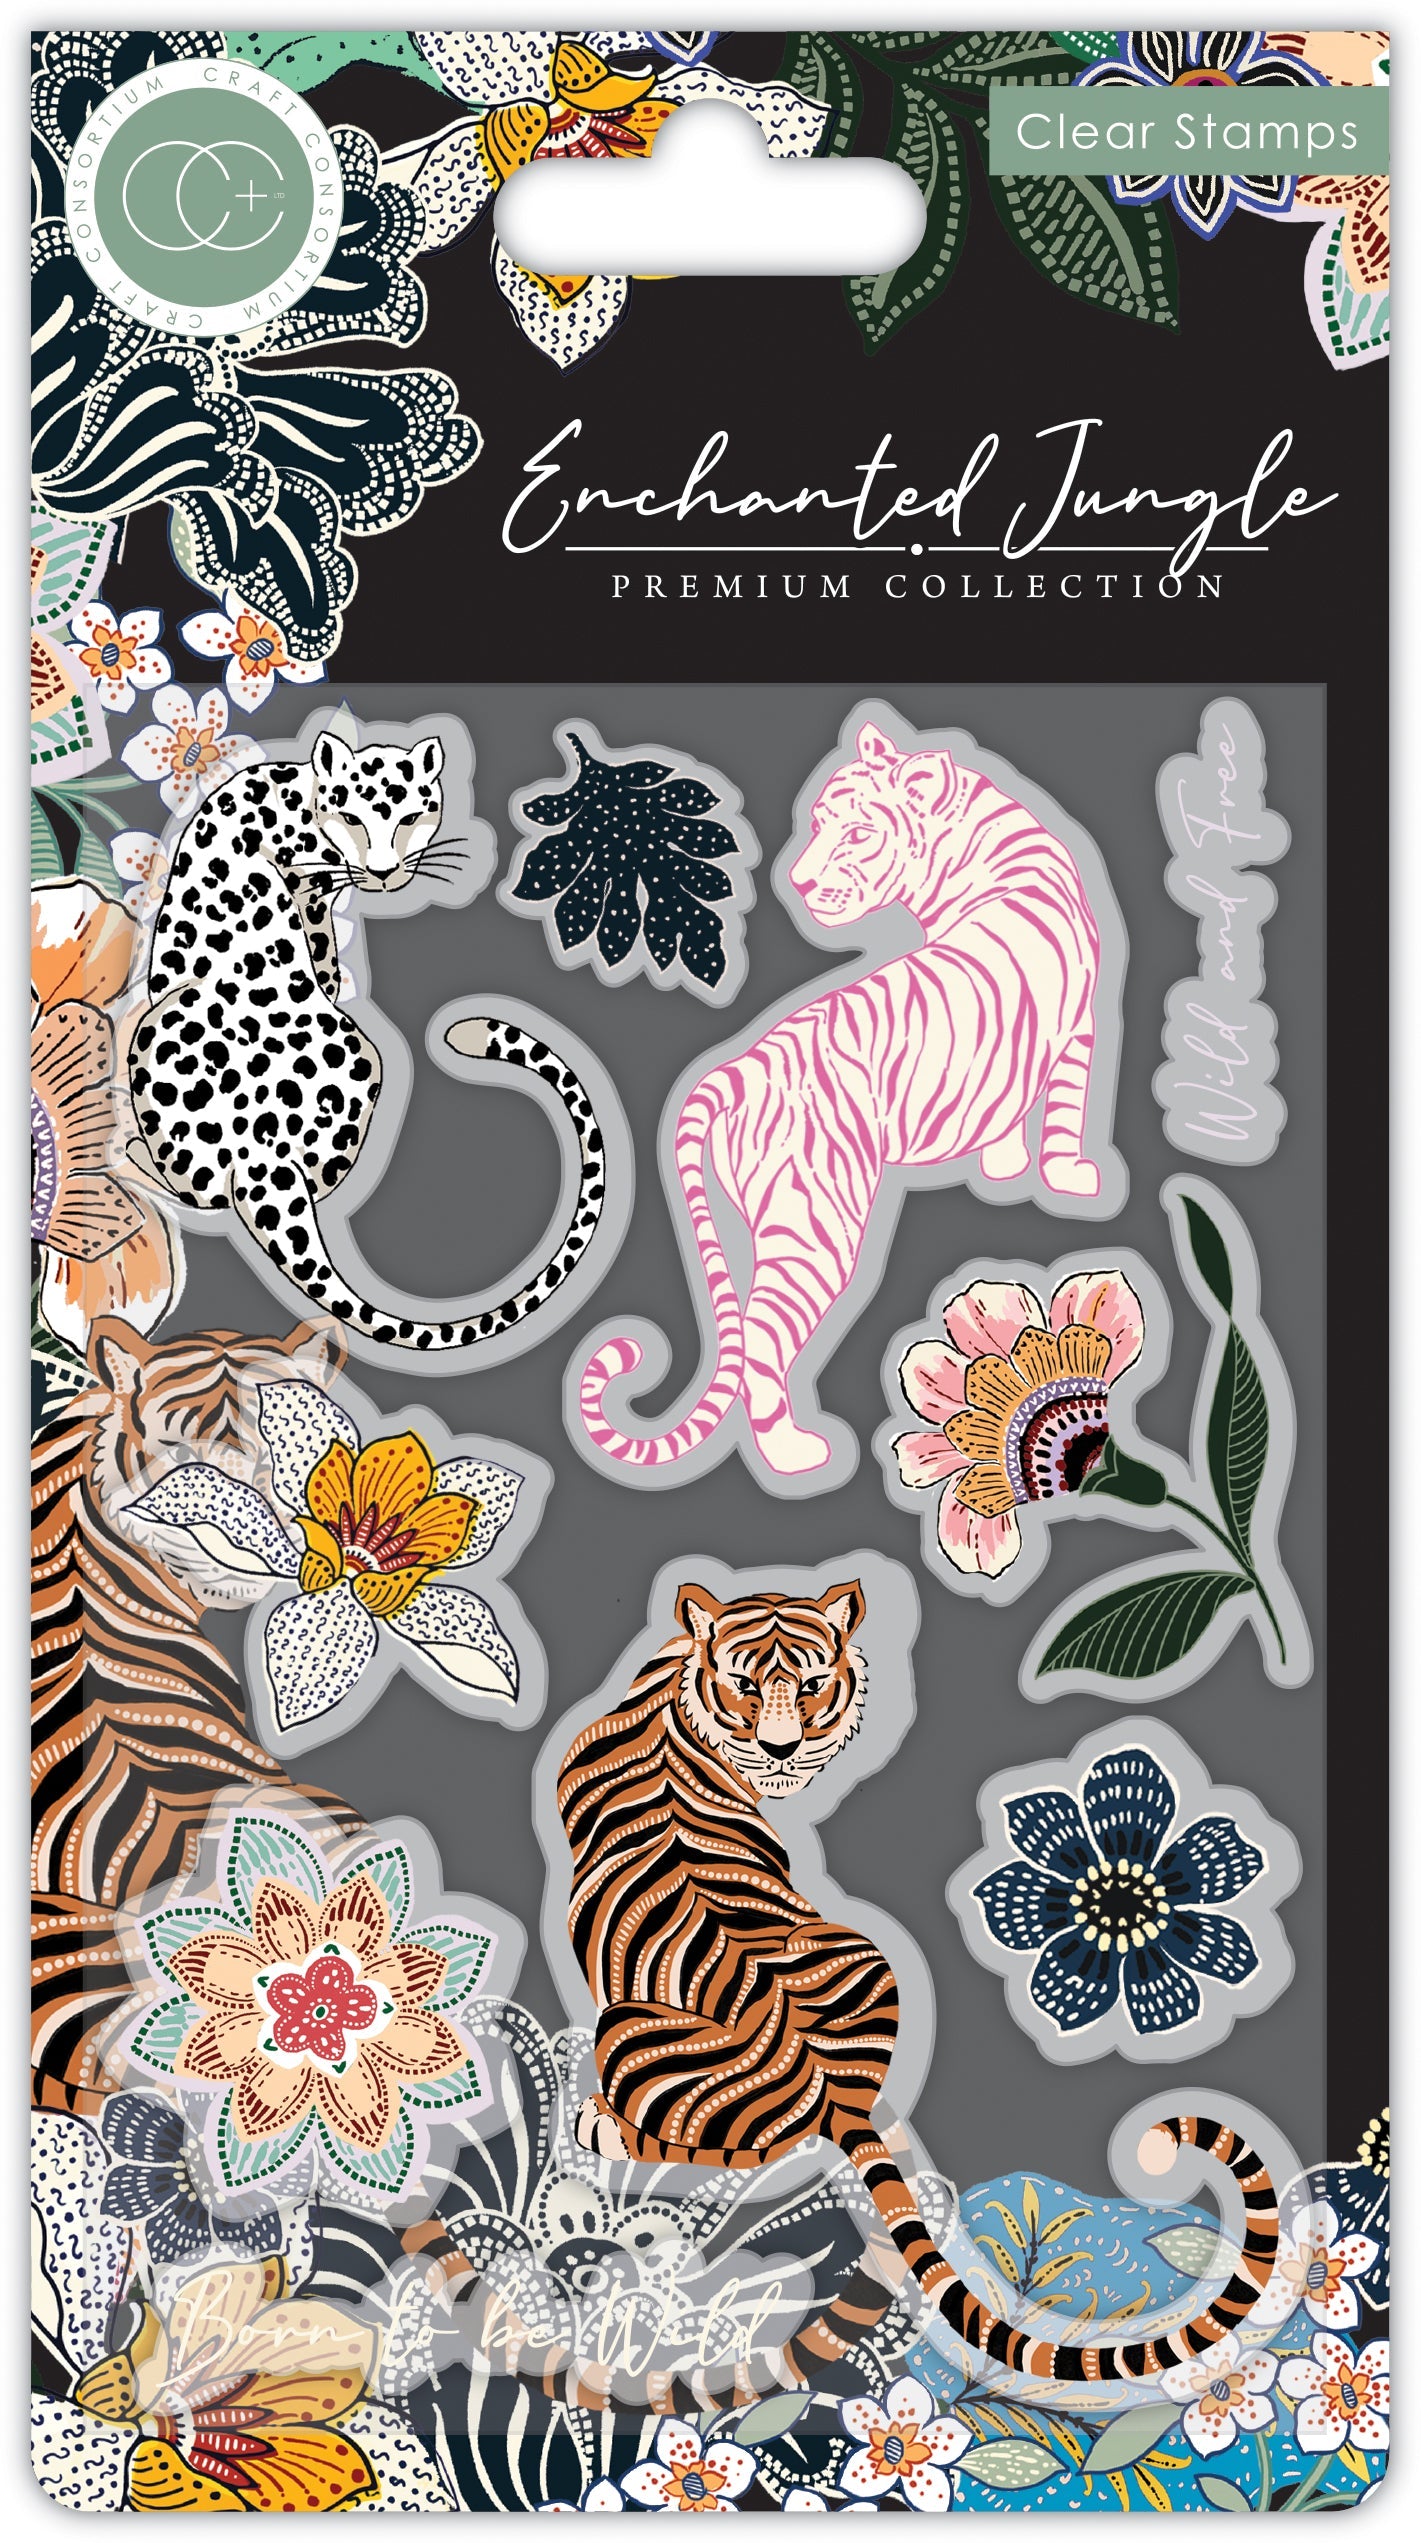 Craft Consortium Enchanted Jungle - Stamp Set